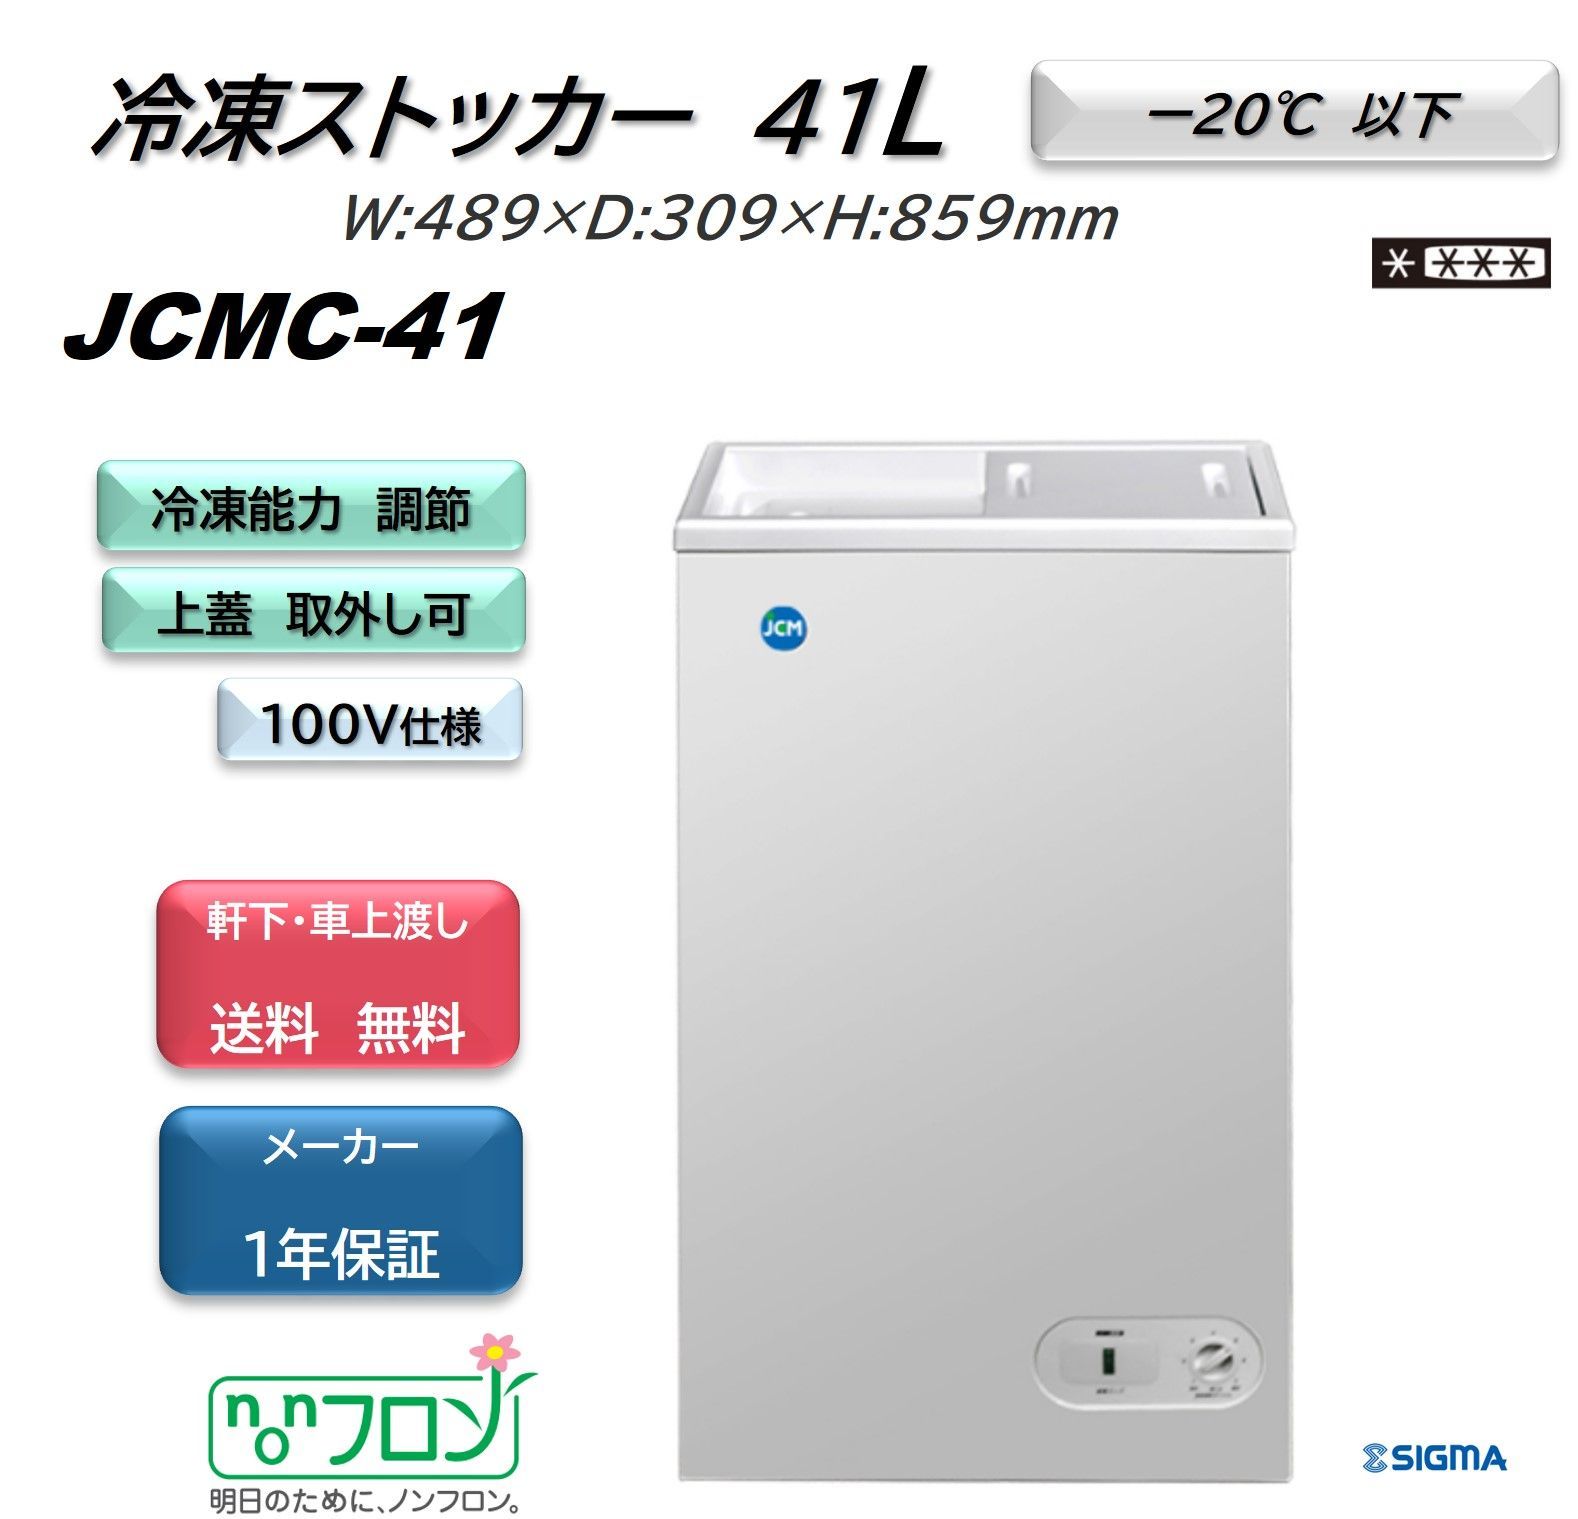 JCMC-41 冷凍ストッカー【新品 保証付】コンパクトストッカー 冷凍庫 